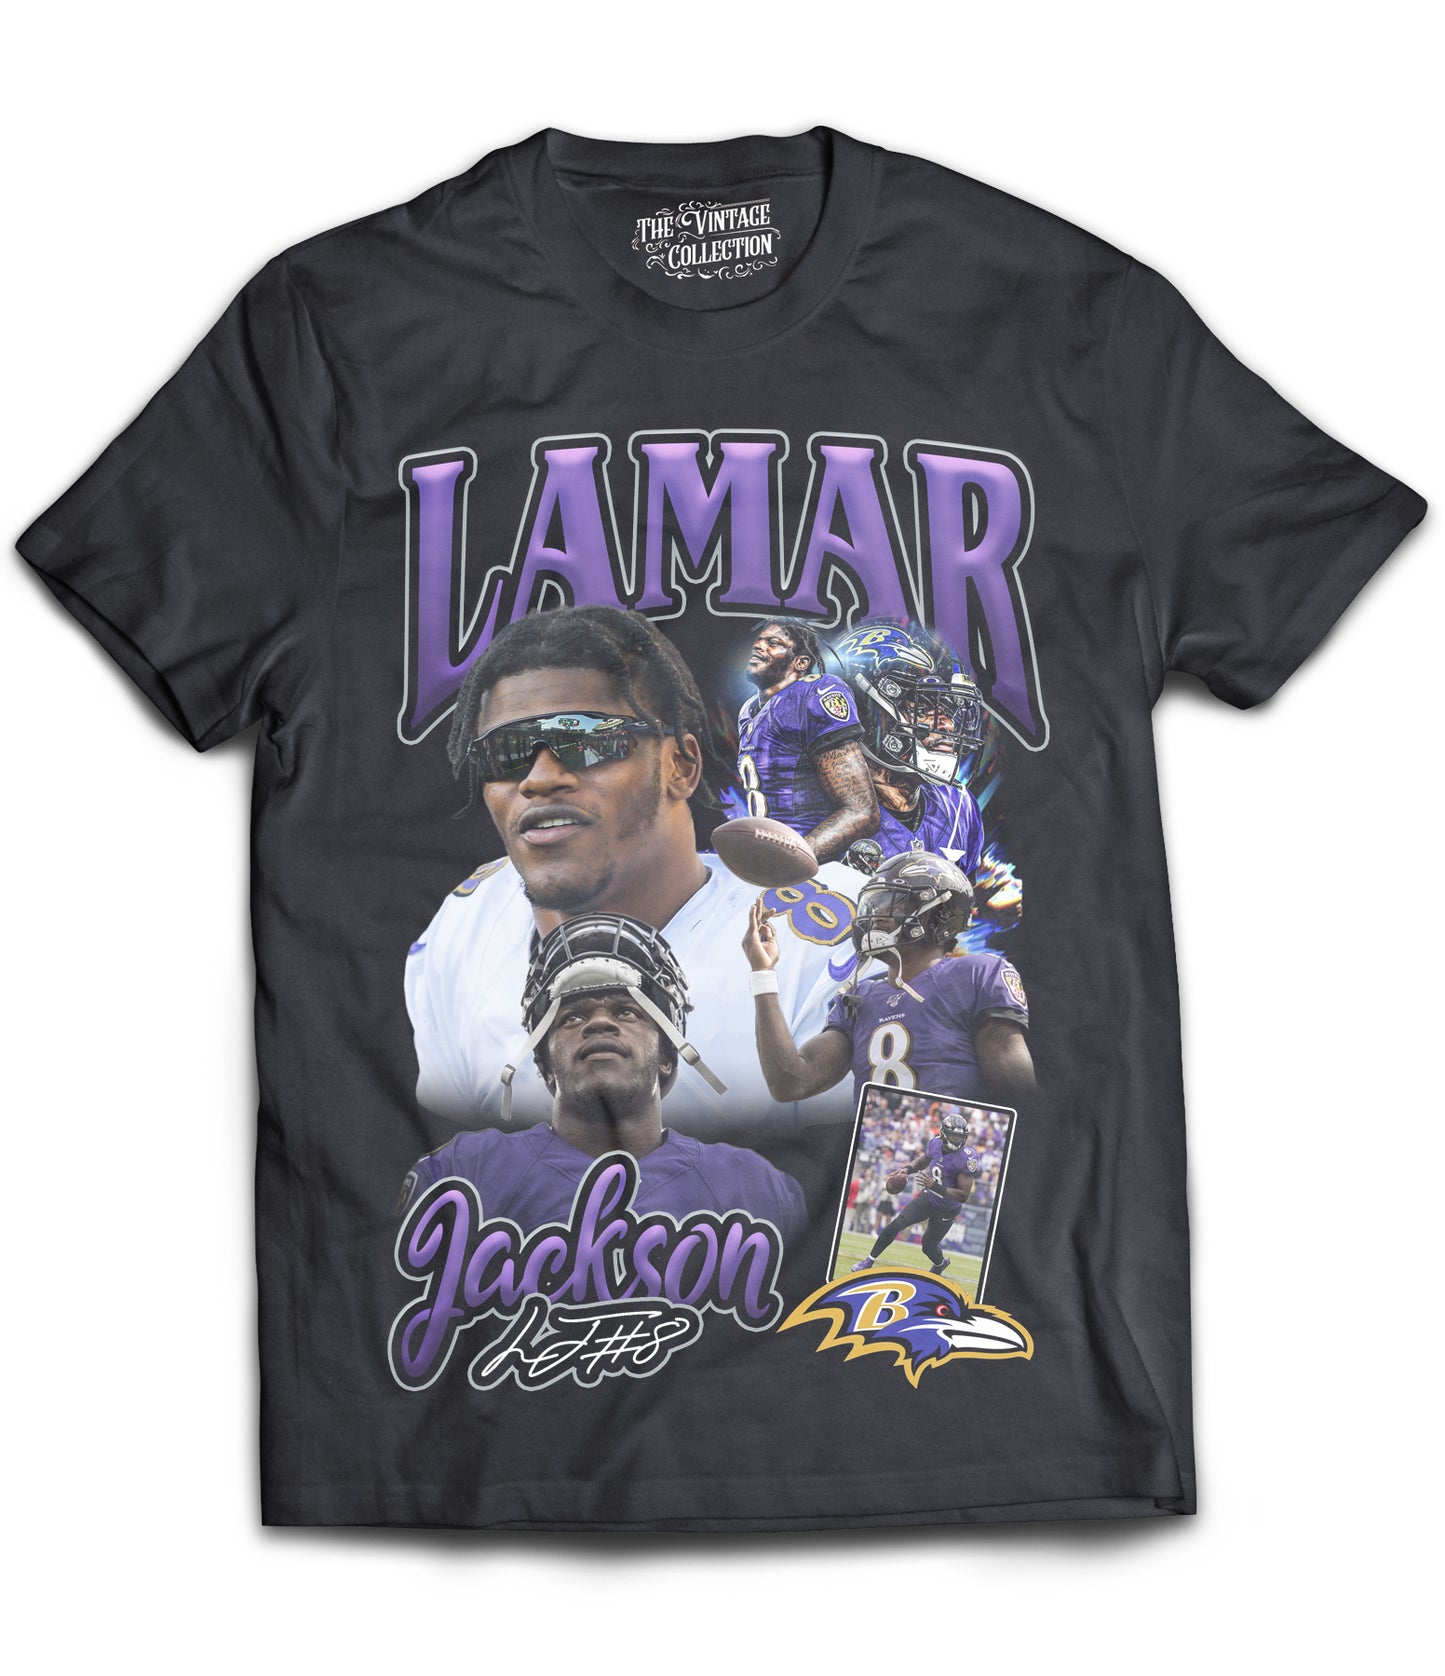 Lamar Jackson Tribute Shirt (Black)